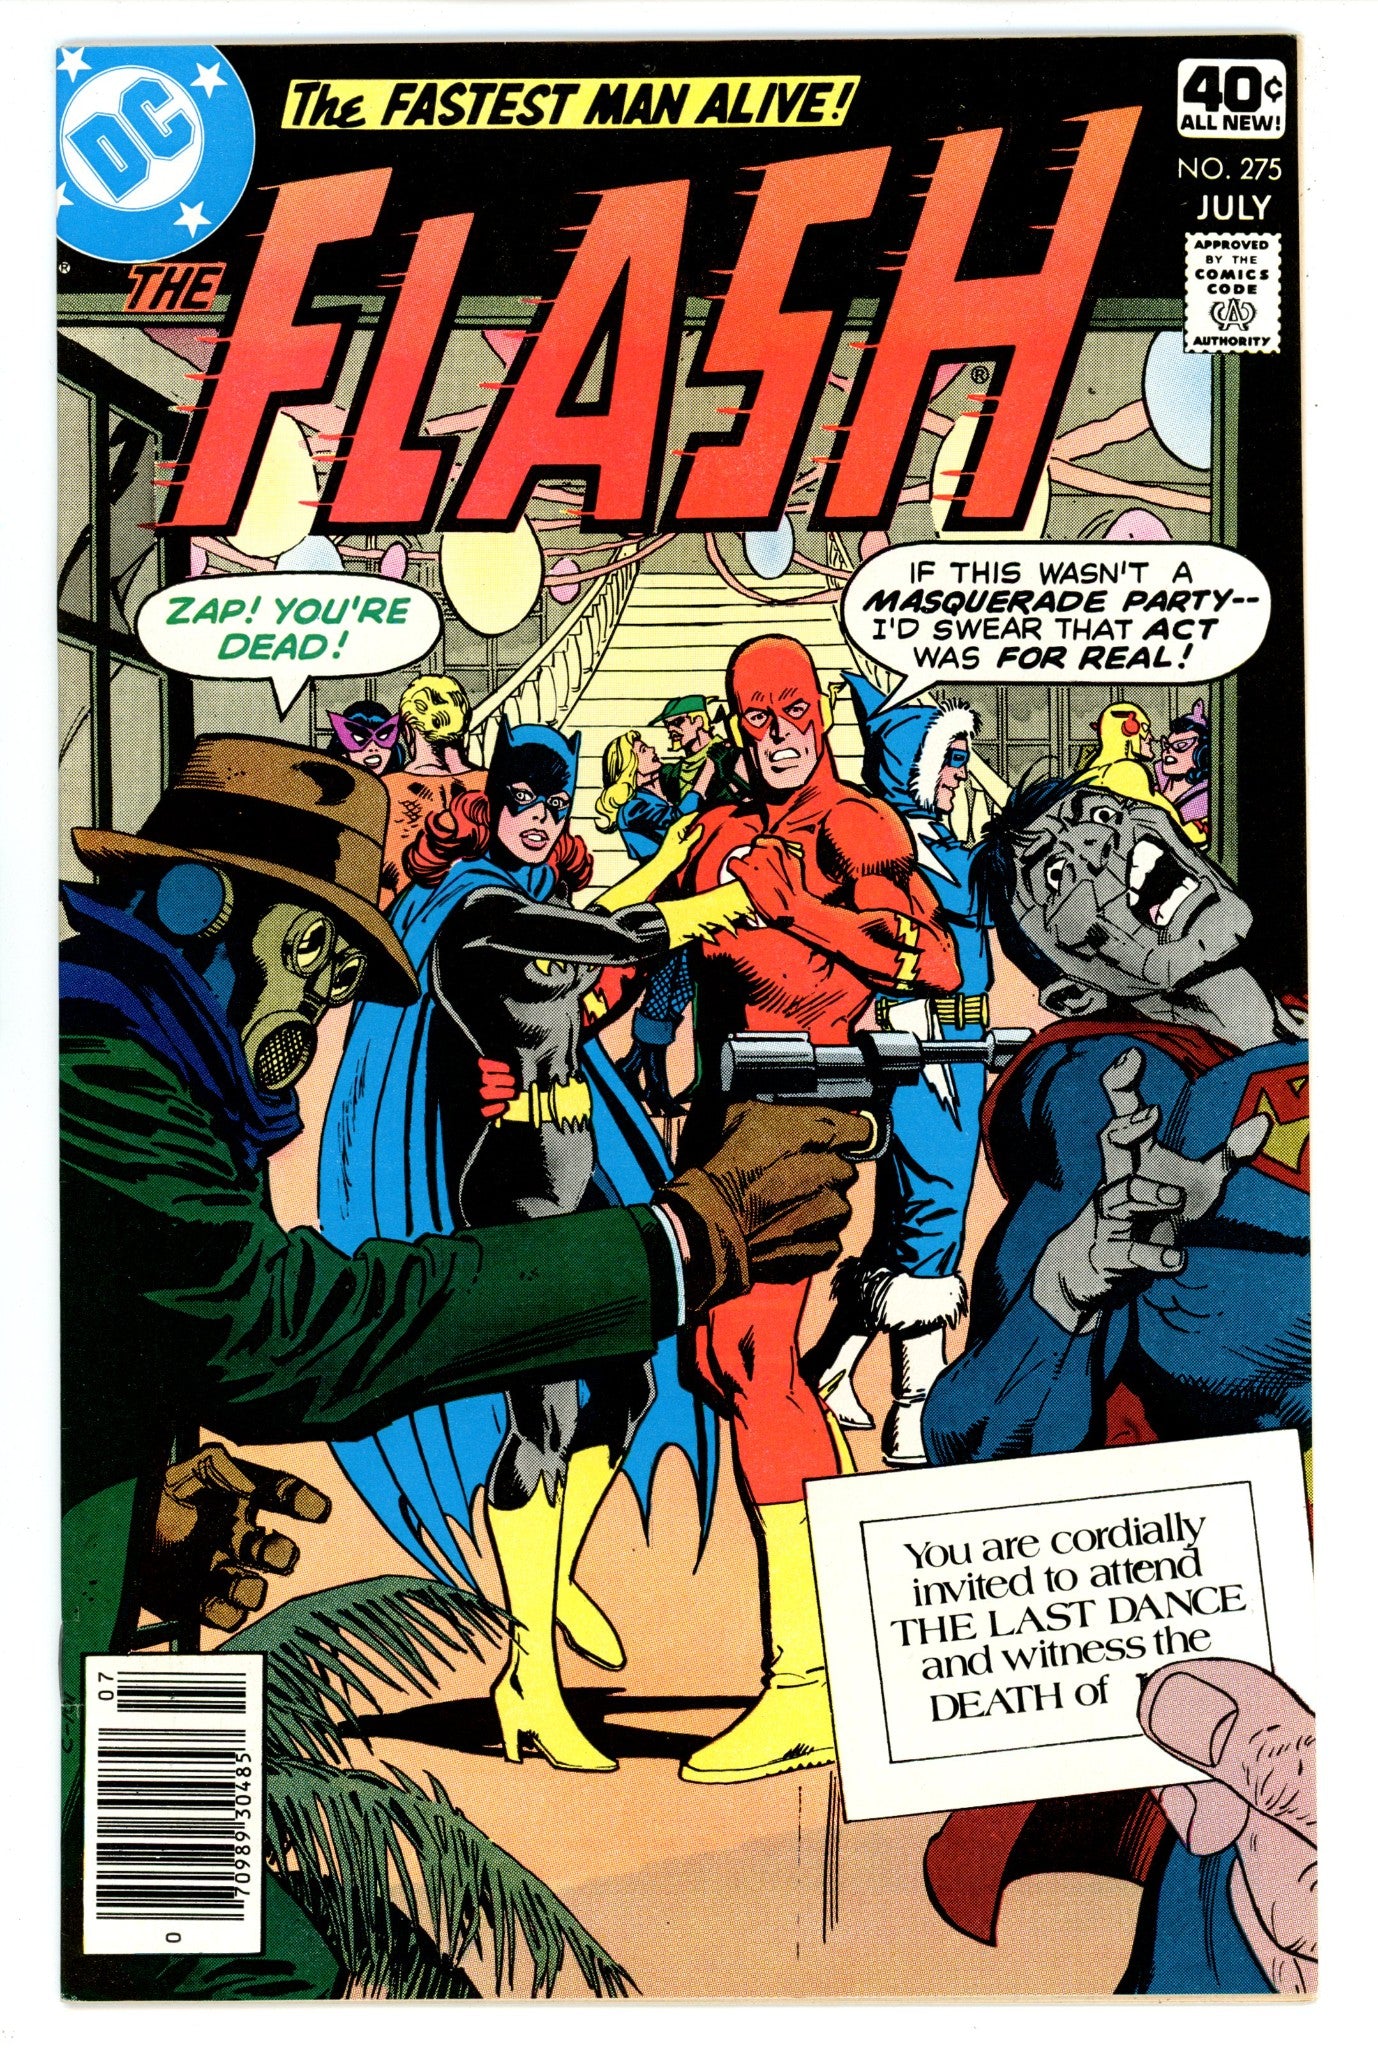 The Flash Vol 1 275 VF/NM (9.0) (1979) 